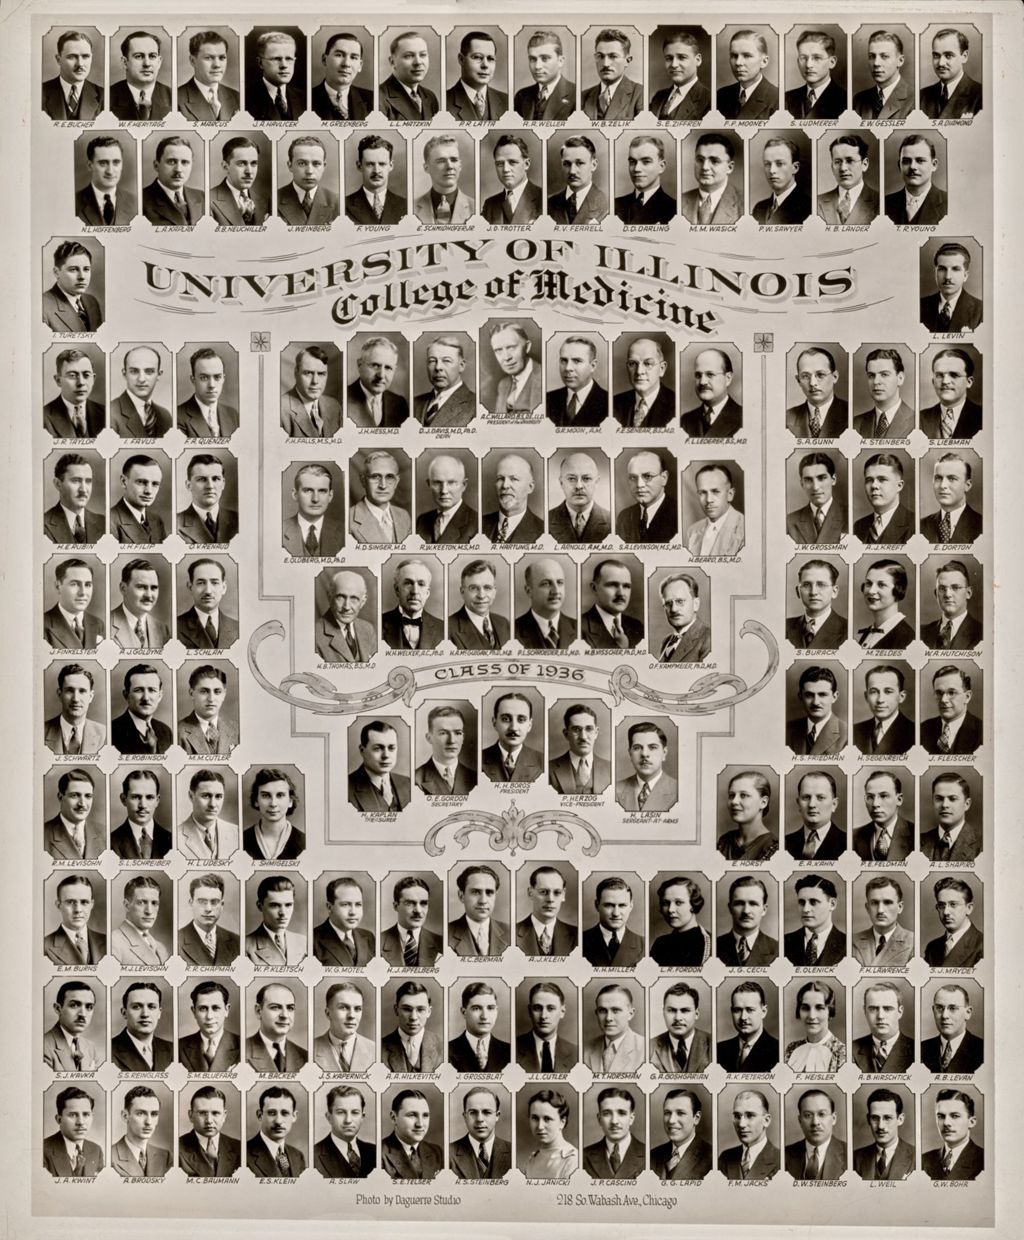 Miniature of 1936 graduating class, University of Illinois College of Medicine